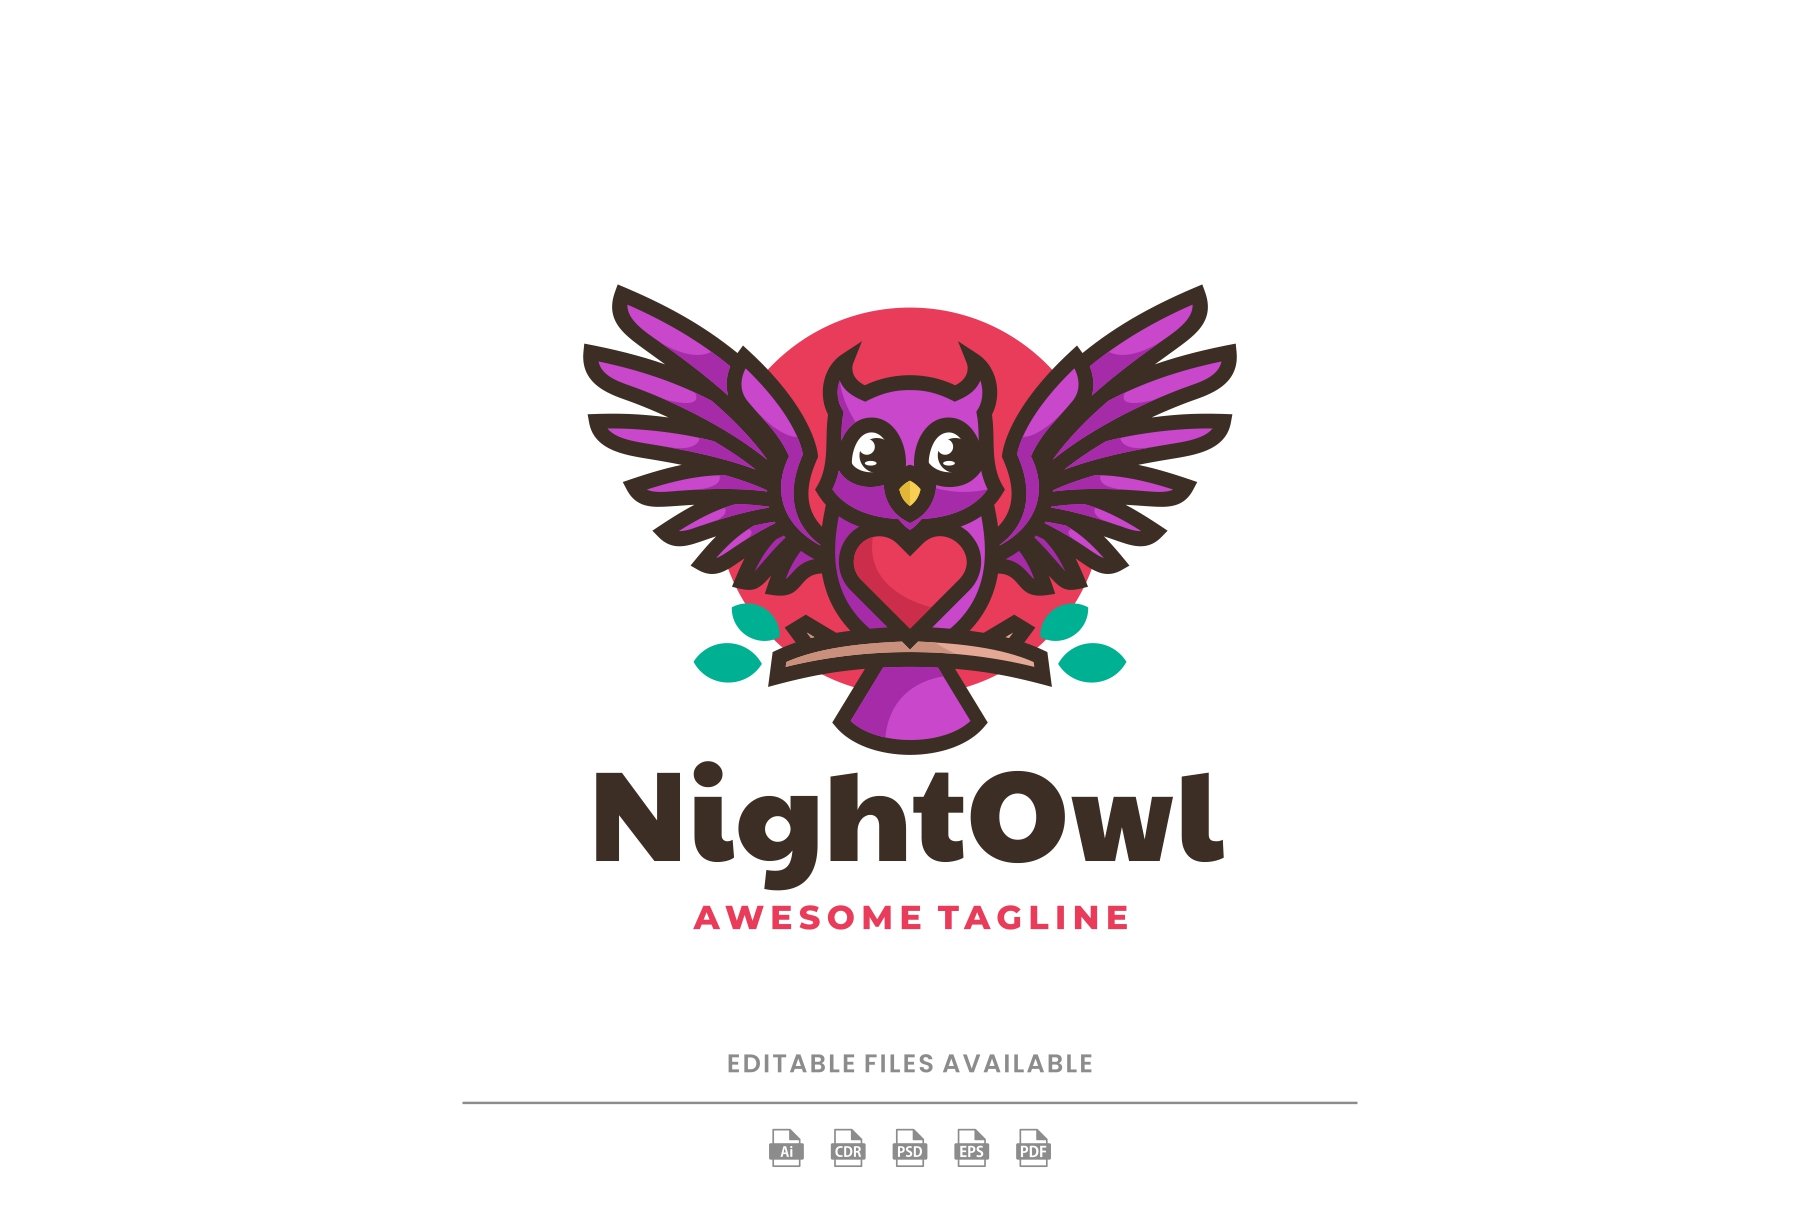 Night Owl Simple Mascot Logo cover image.